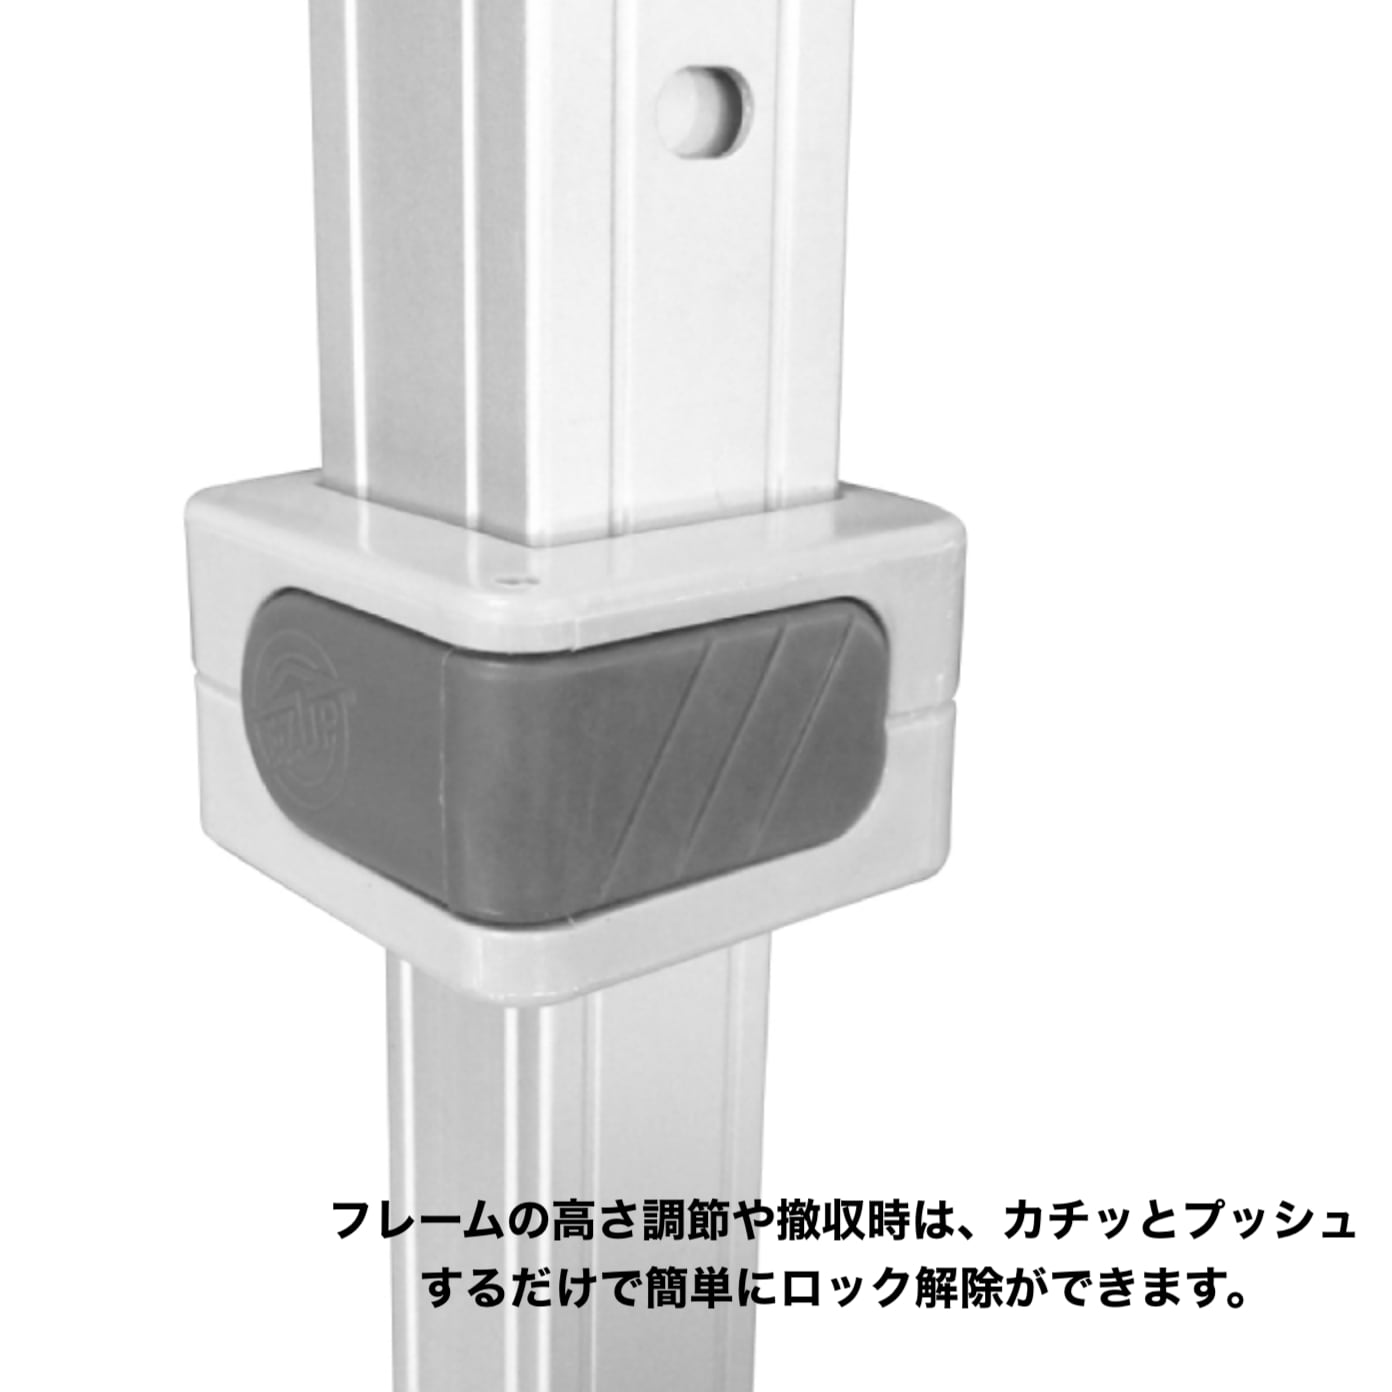 E-Z UP（イージーアップ）ビスタ (3.5×3.5m) DMJ35-18 イージーアップテント・簡単タープ・シェード・日除け hidas  leiri